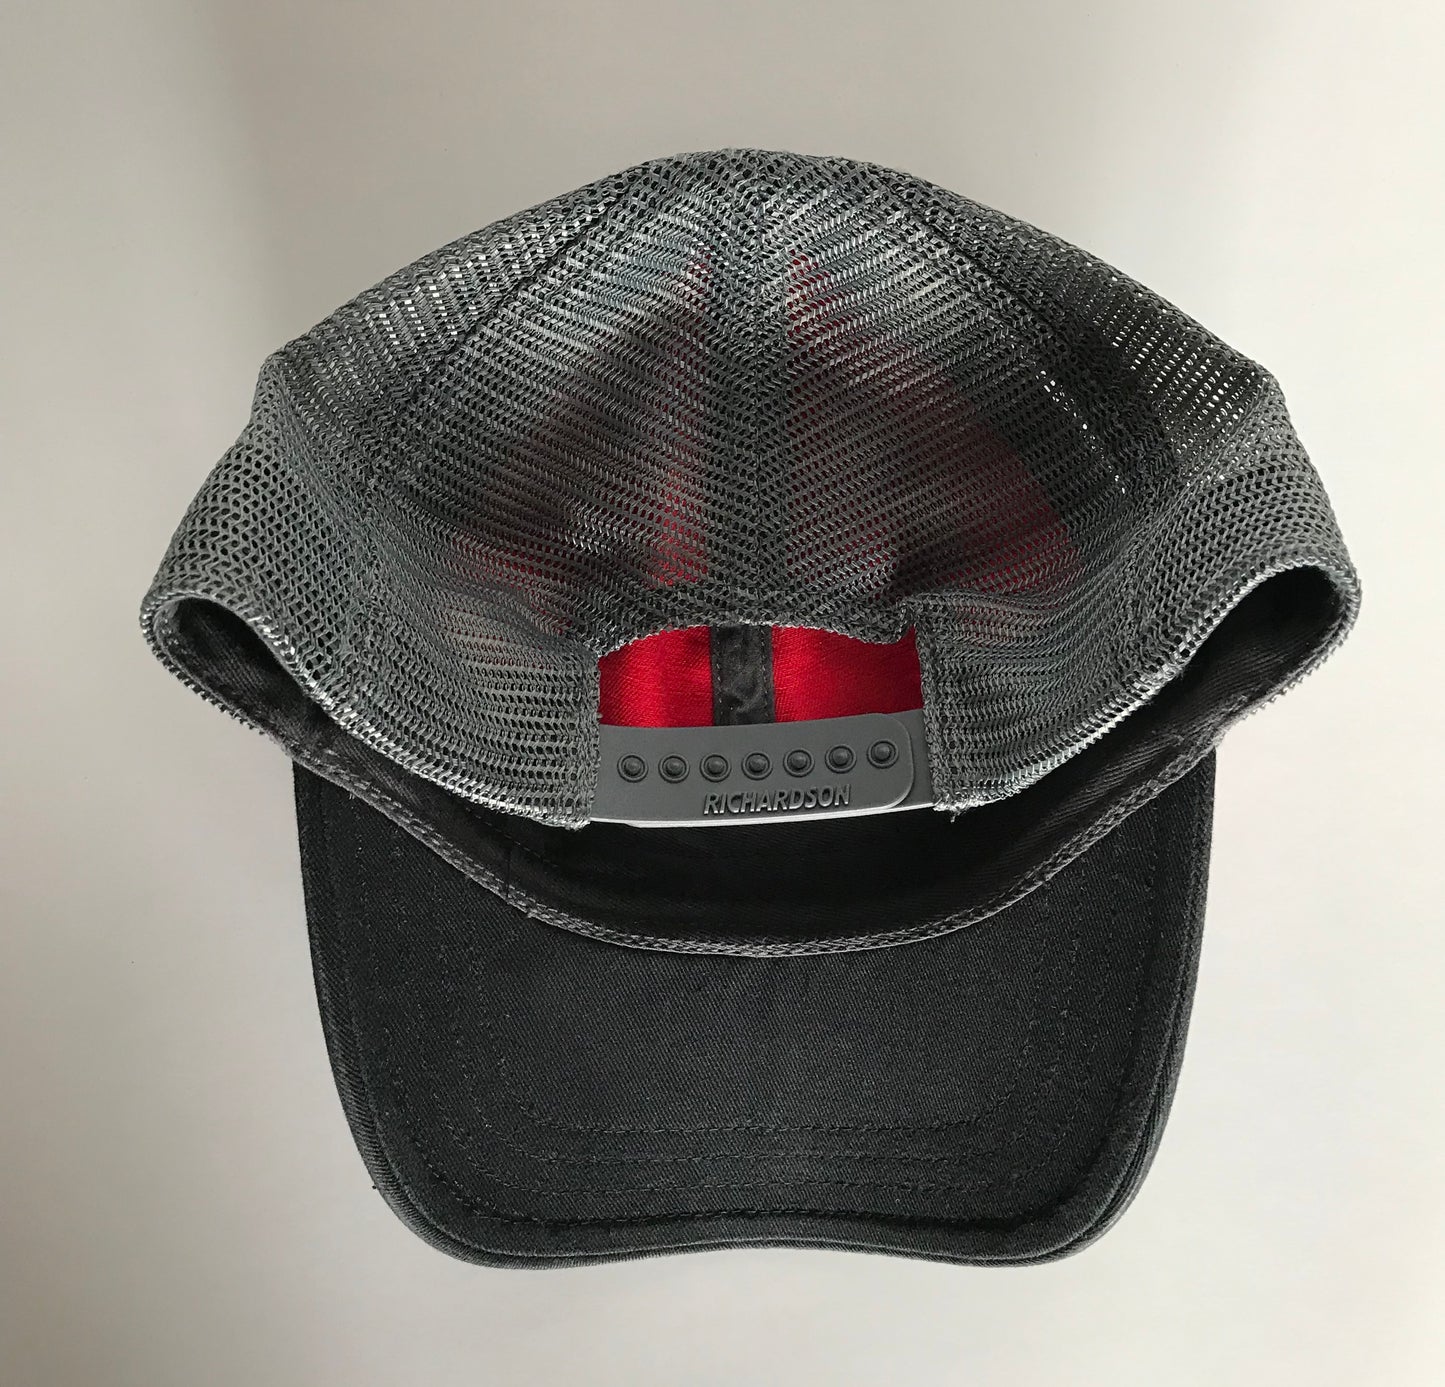 Low Profile Knox Redskins Hat - Adjustable - Red/Charcoal/Black/Silver